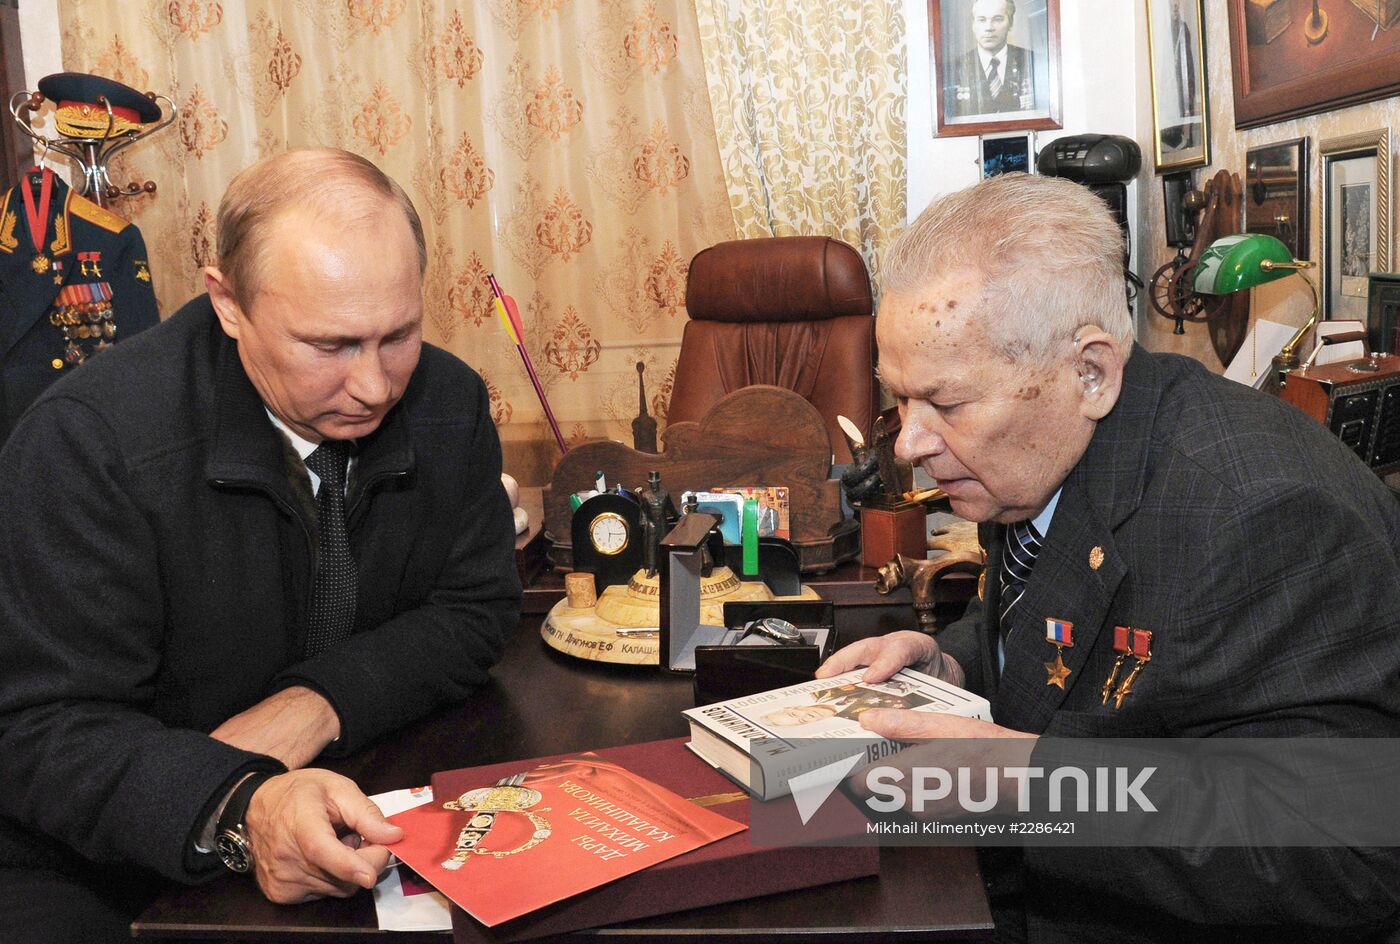 Vladimir Putin's working visit to Izhevsk